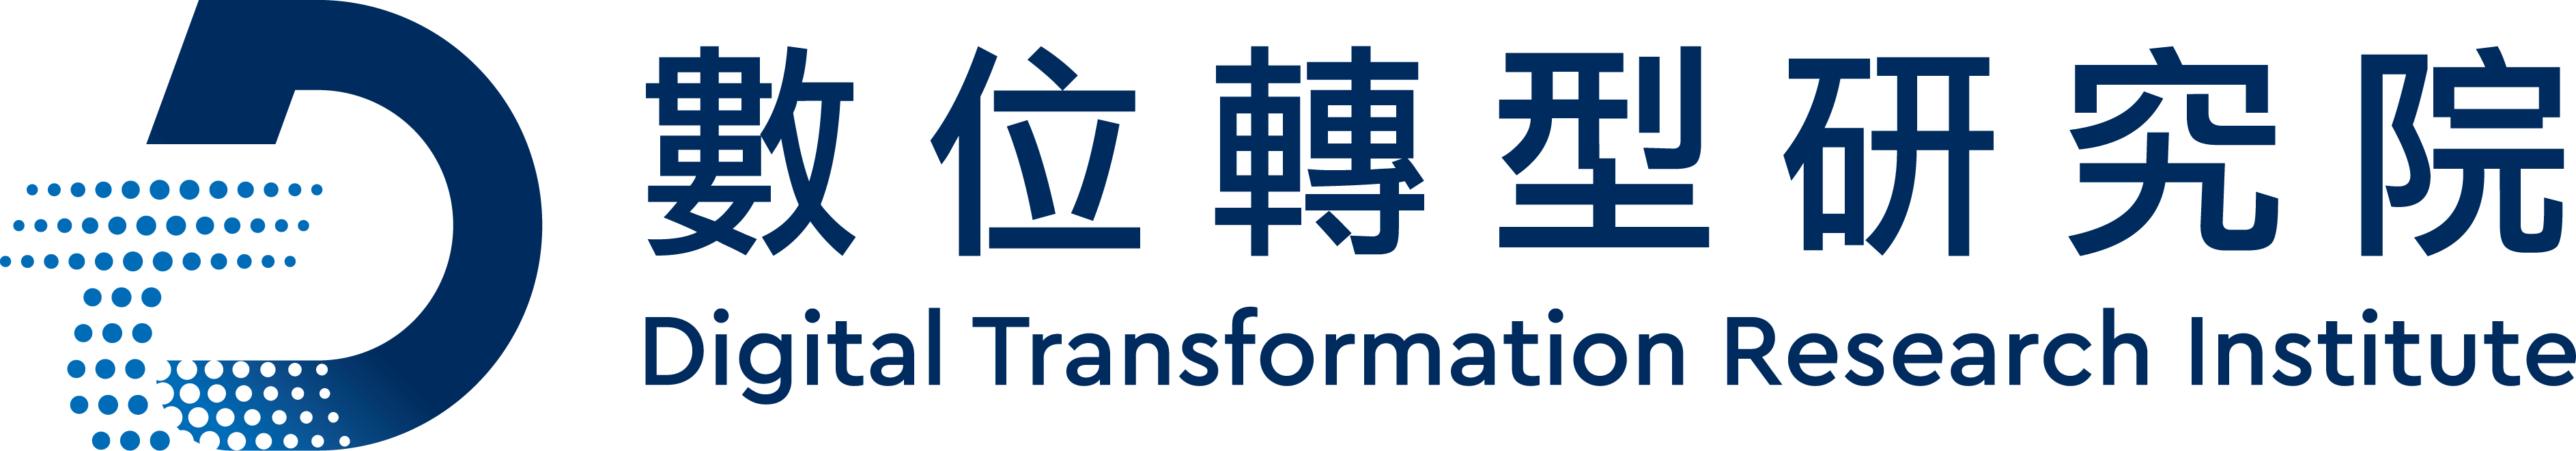 III, Digital Transformation Research Institute (DTRI) logo